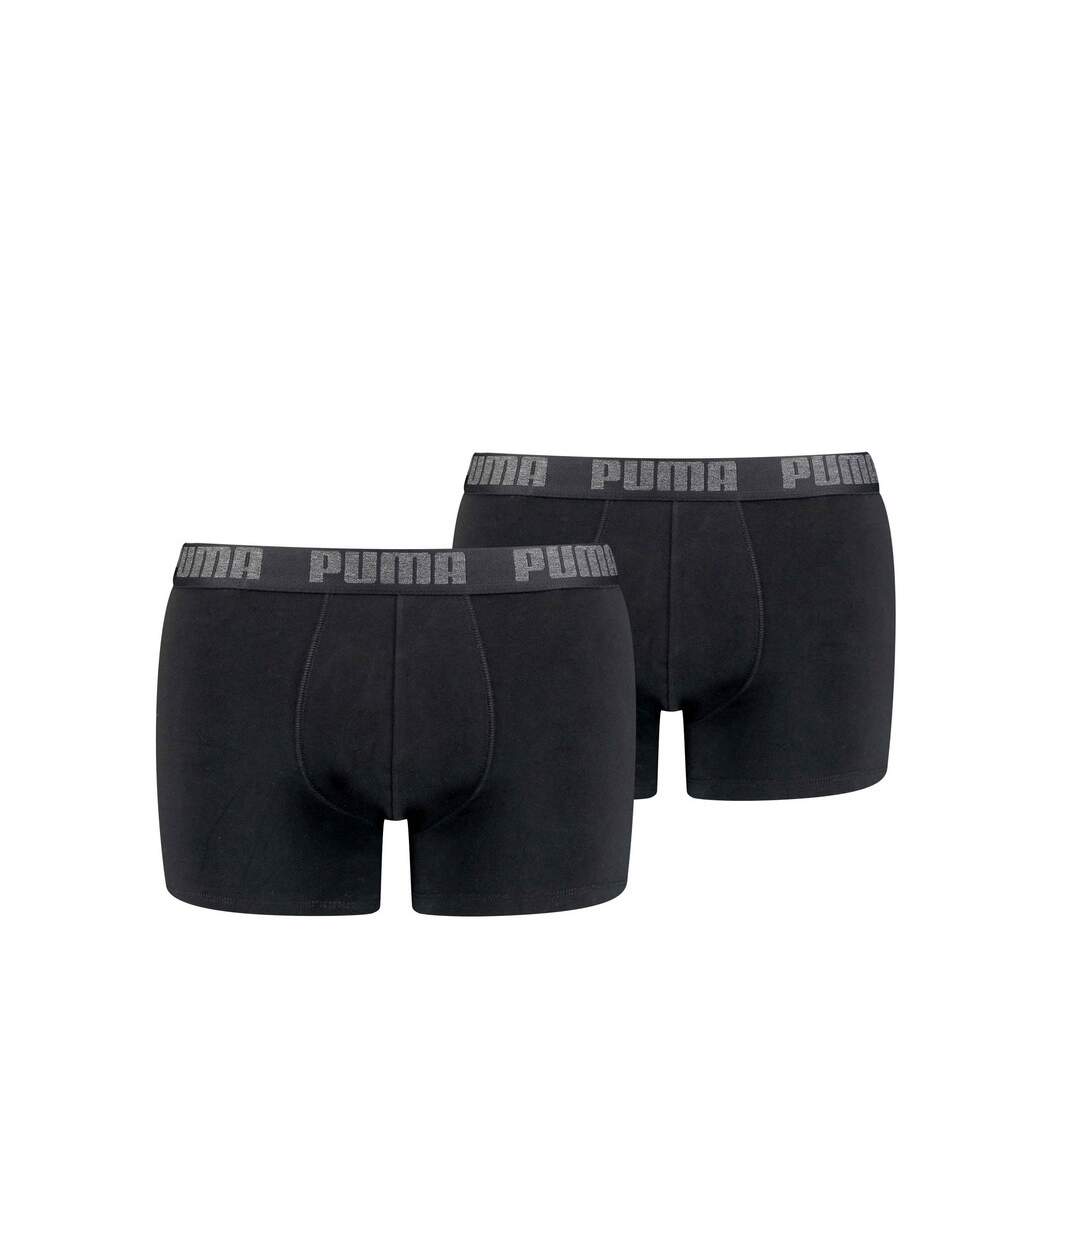 Puma Mens Basic Boxer Shorts (Pack of 2) (Black)